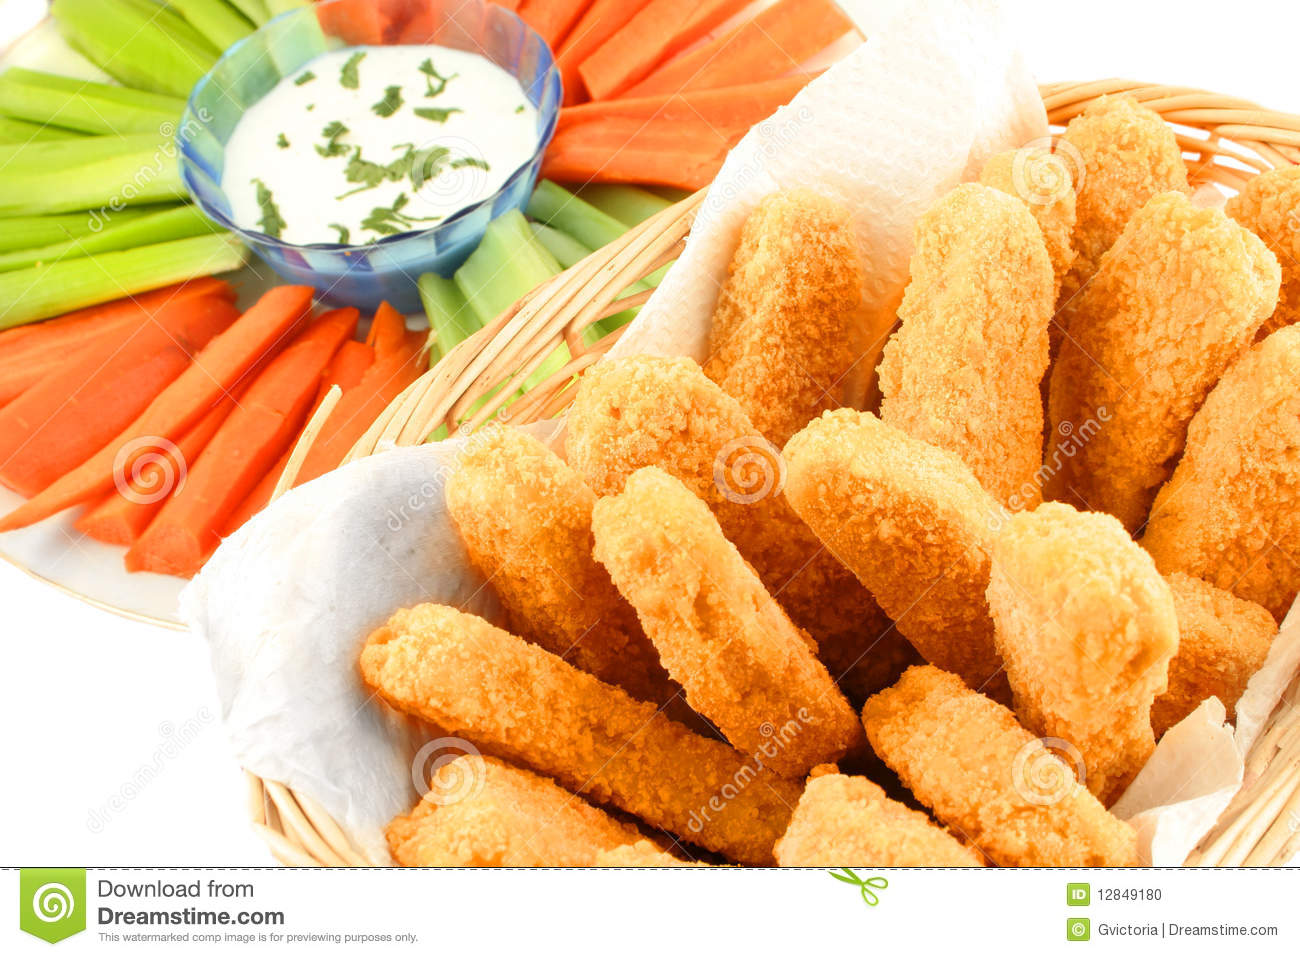 Basket Of Crispy Chicken Fingers With Platter Of Vegetables And Dip